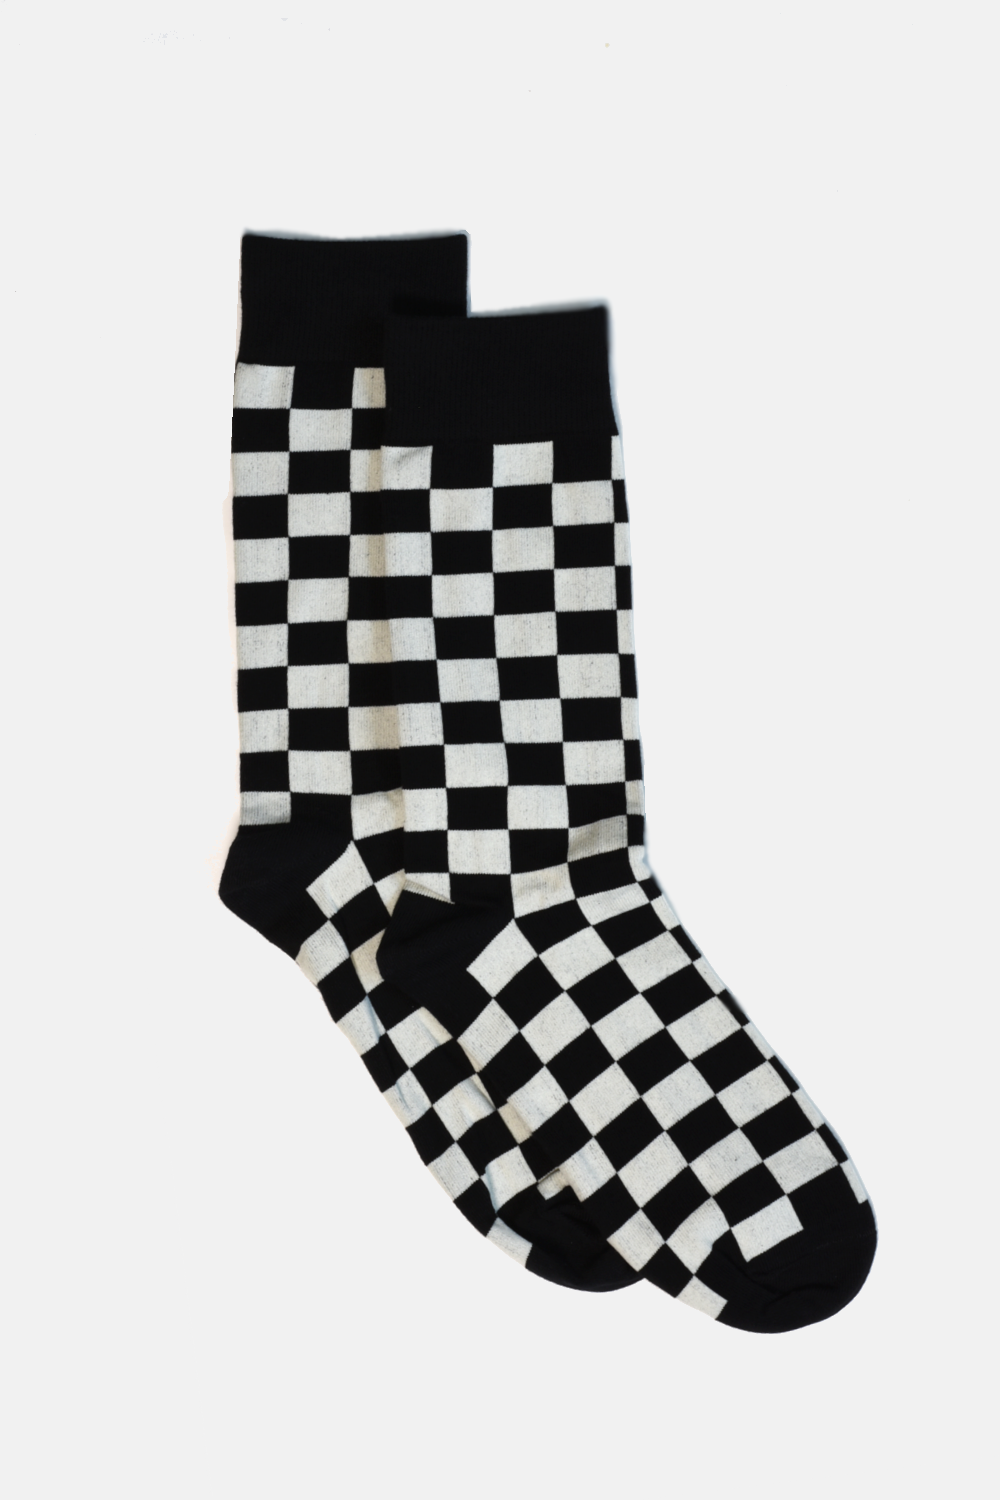 Black Checker Socks